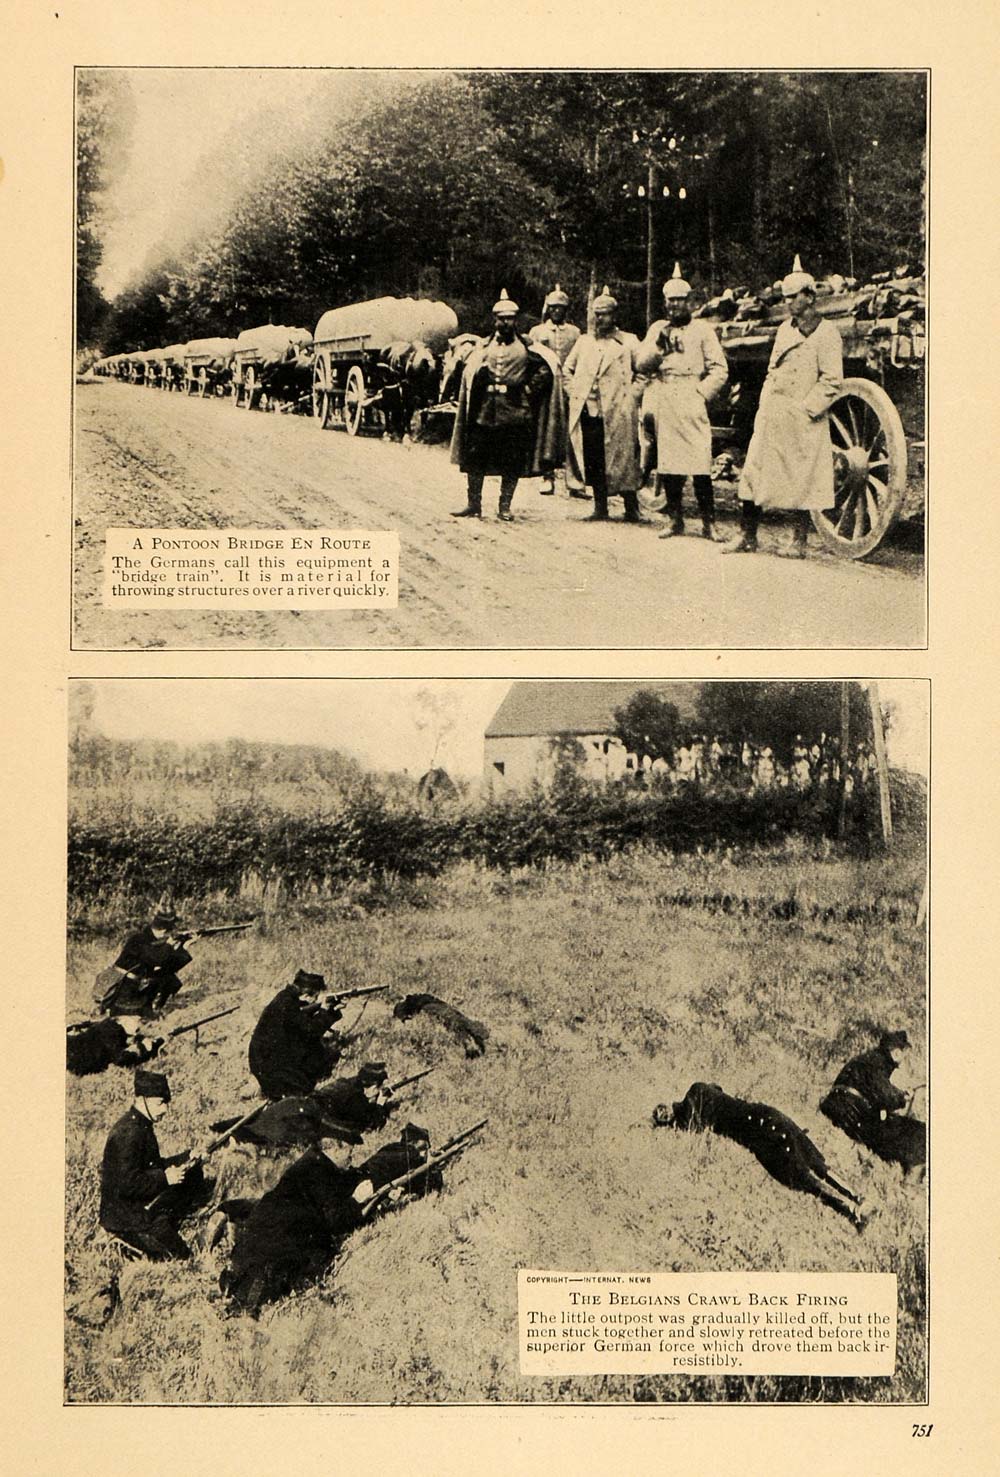 1915 Print World War I Armies Destruction Battlefields ORIGINAL HISTORIC TW2